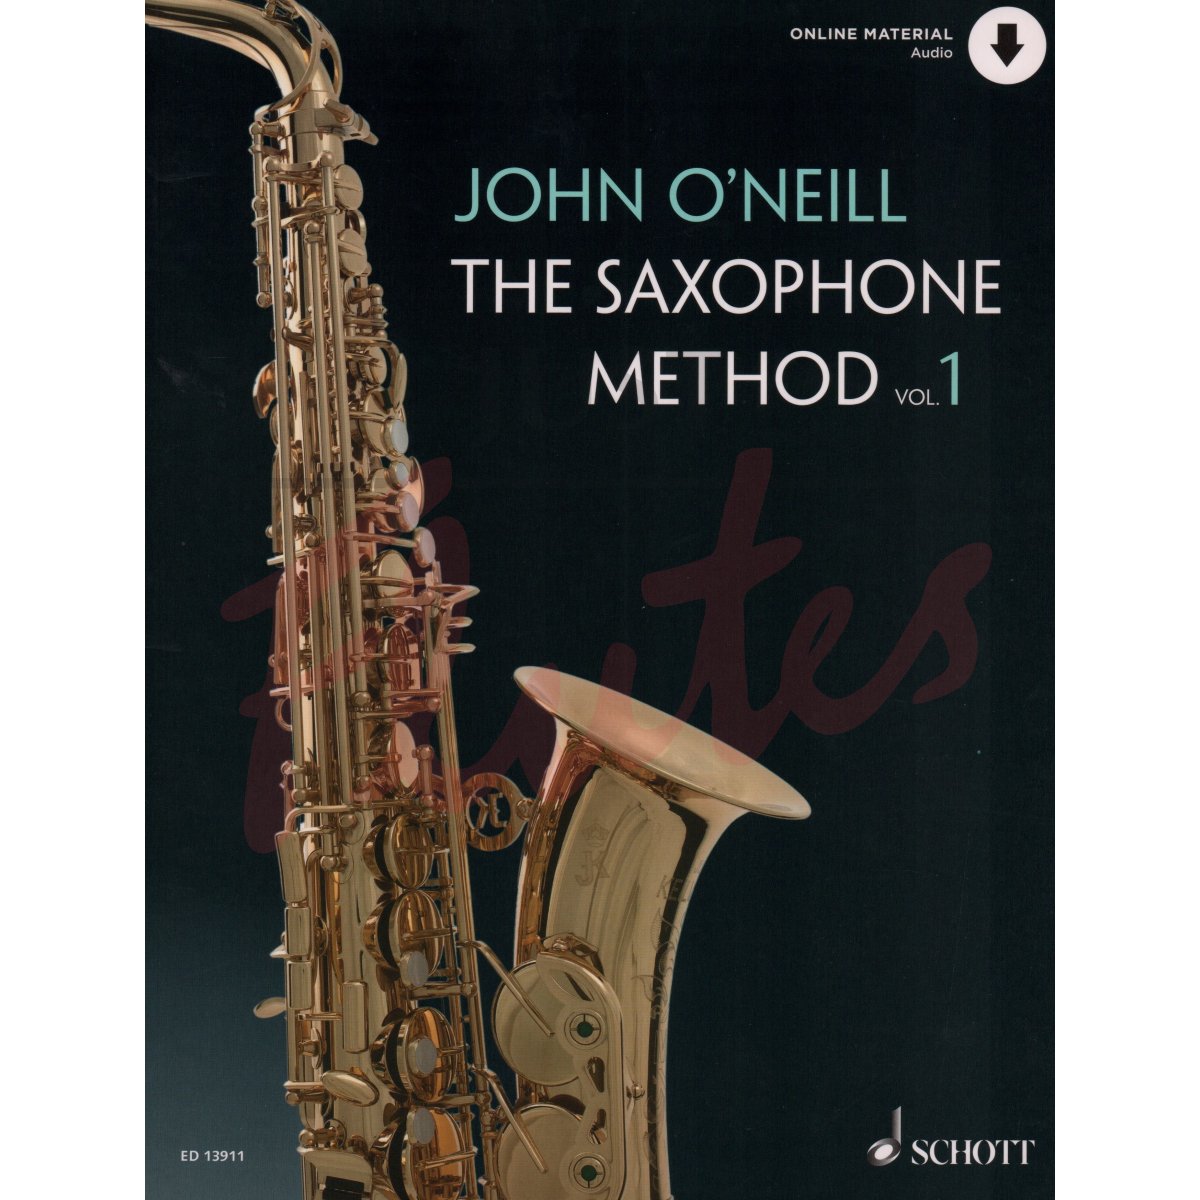 The Saxophone Method Vol 1